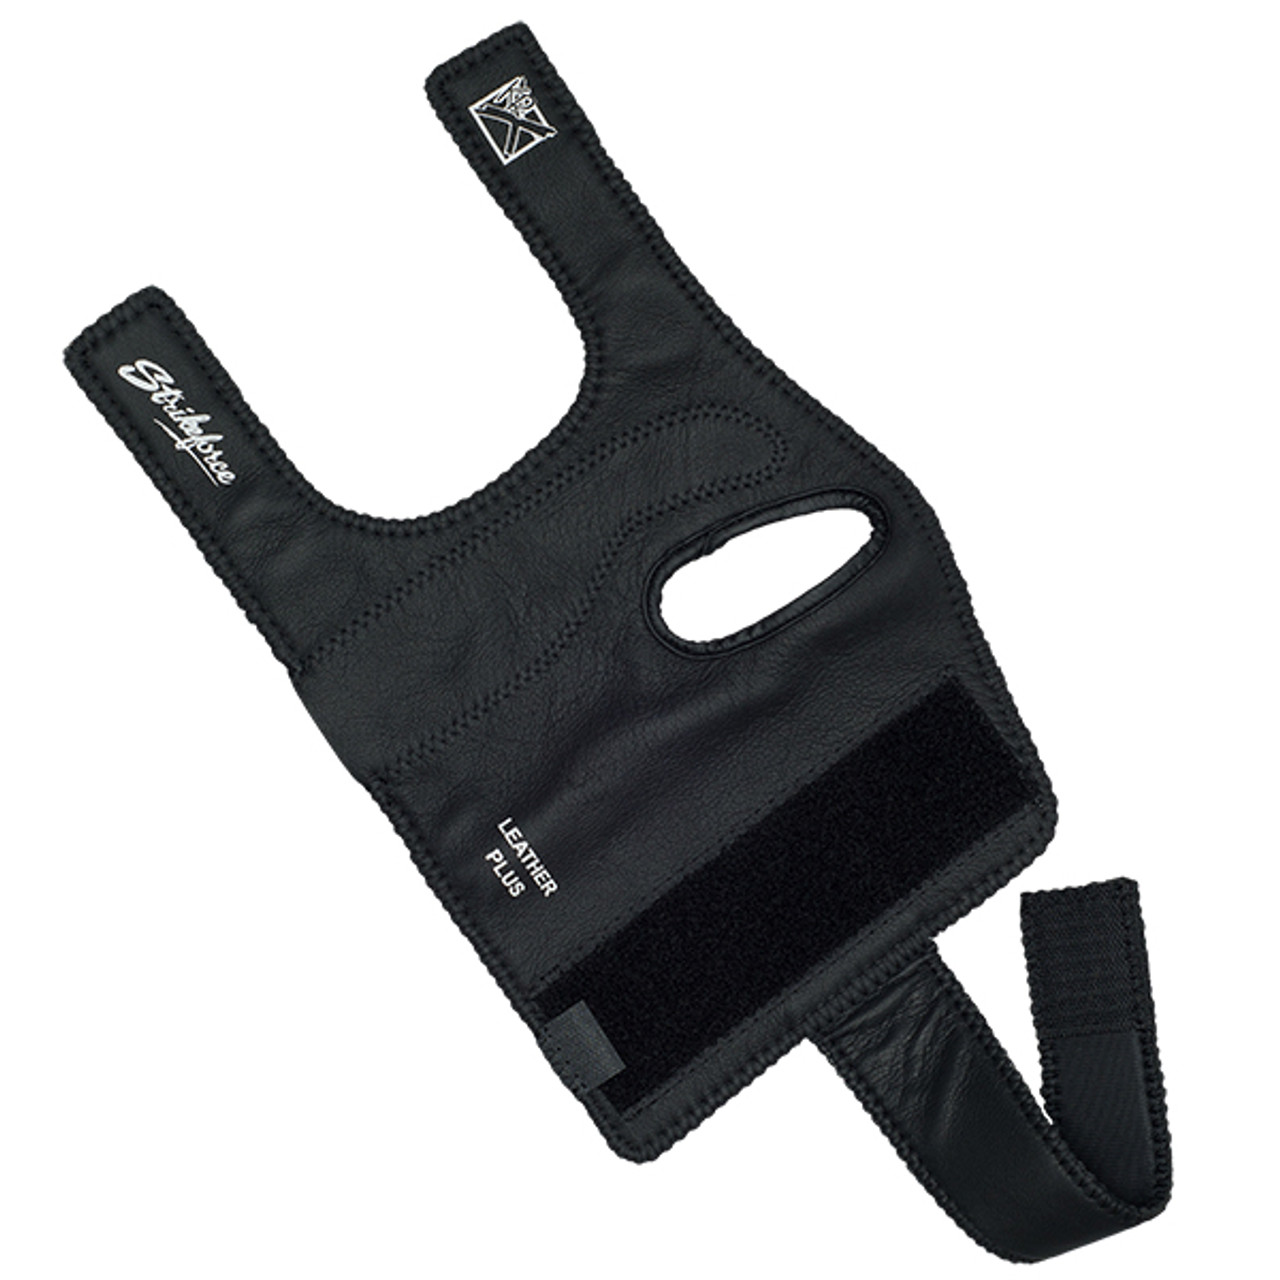 KR Strikeforce Leather Positioner Plus Wrist Support